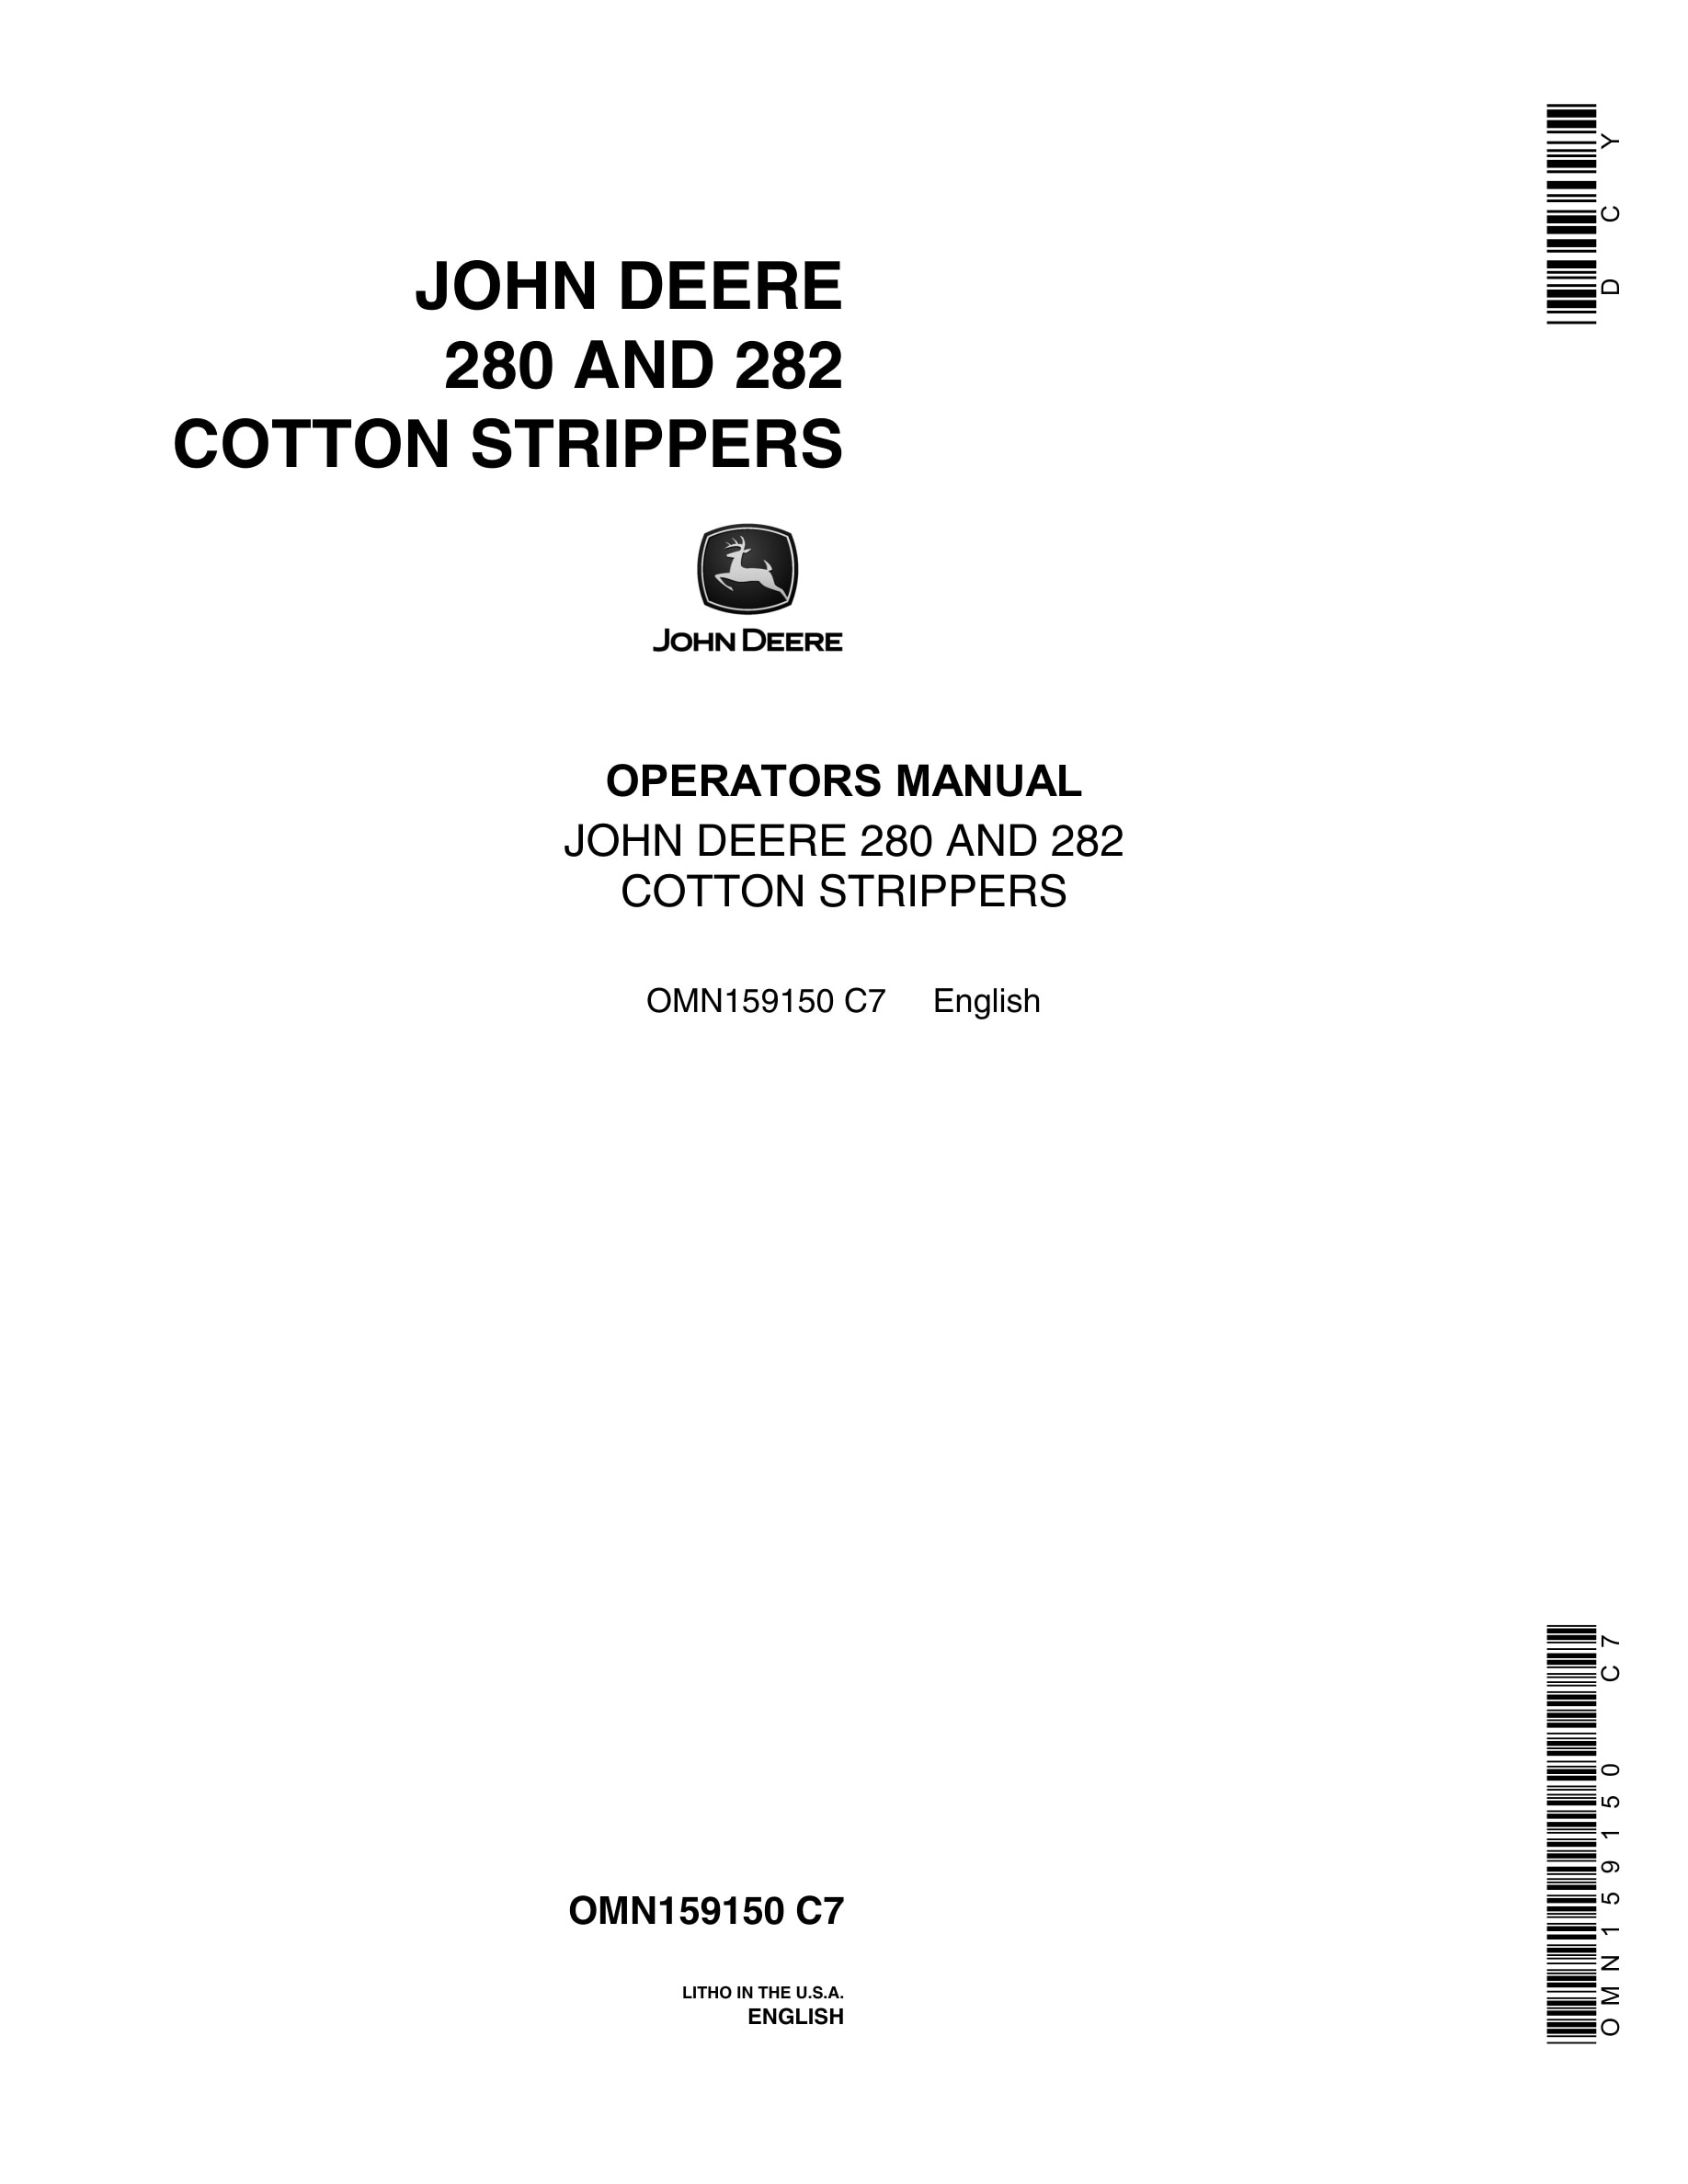 John Deere 280 and 282 Cotton Sripper Operator Manual OMN159150-1